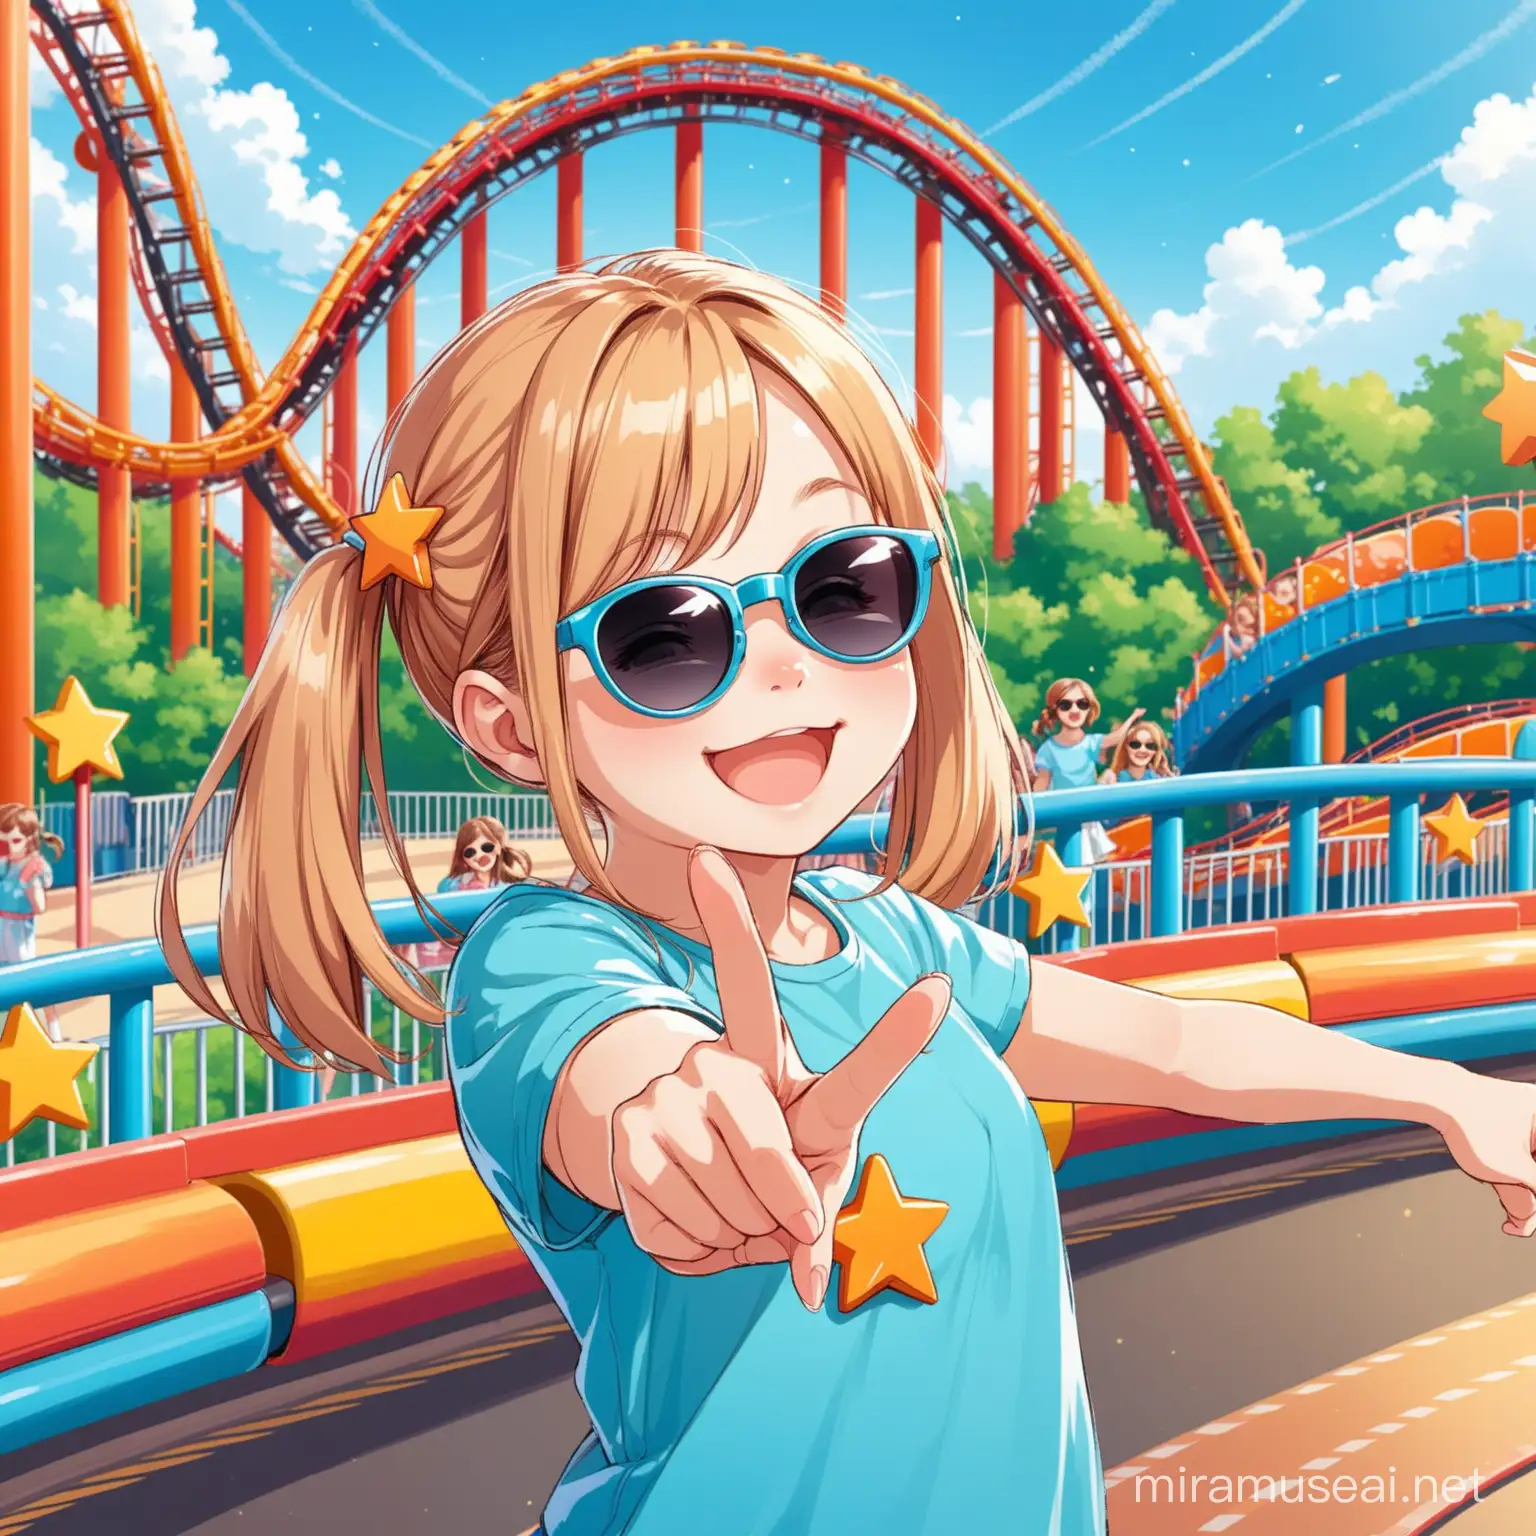 Joyful Young Girl in Sunglasses at Amusement Park Roller Coaster